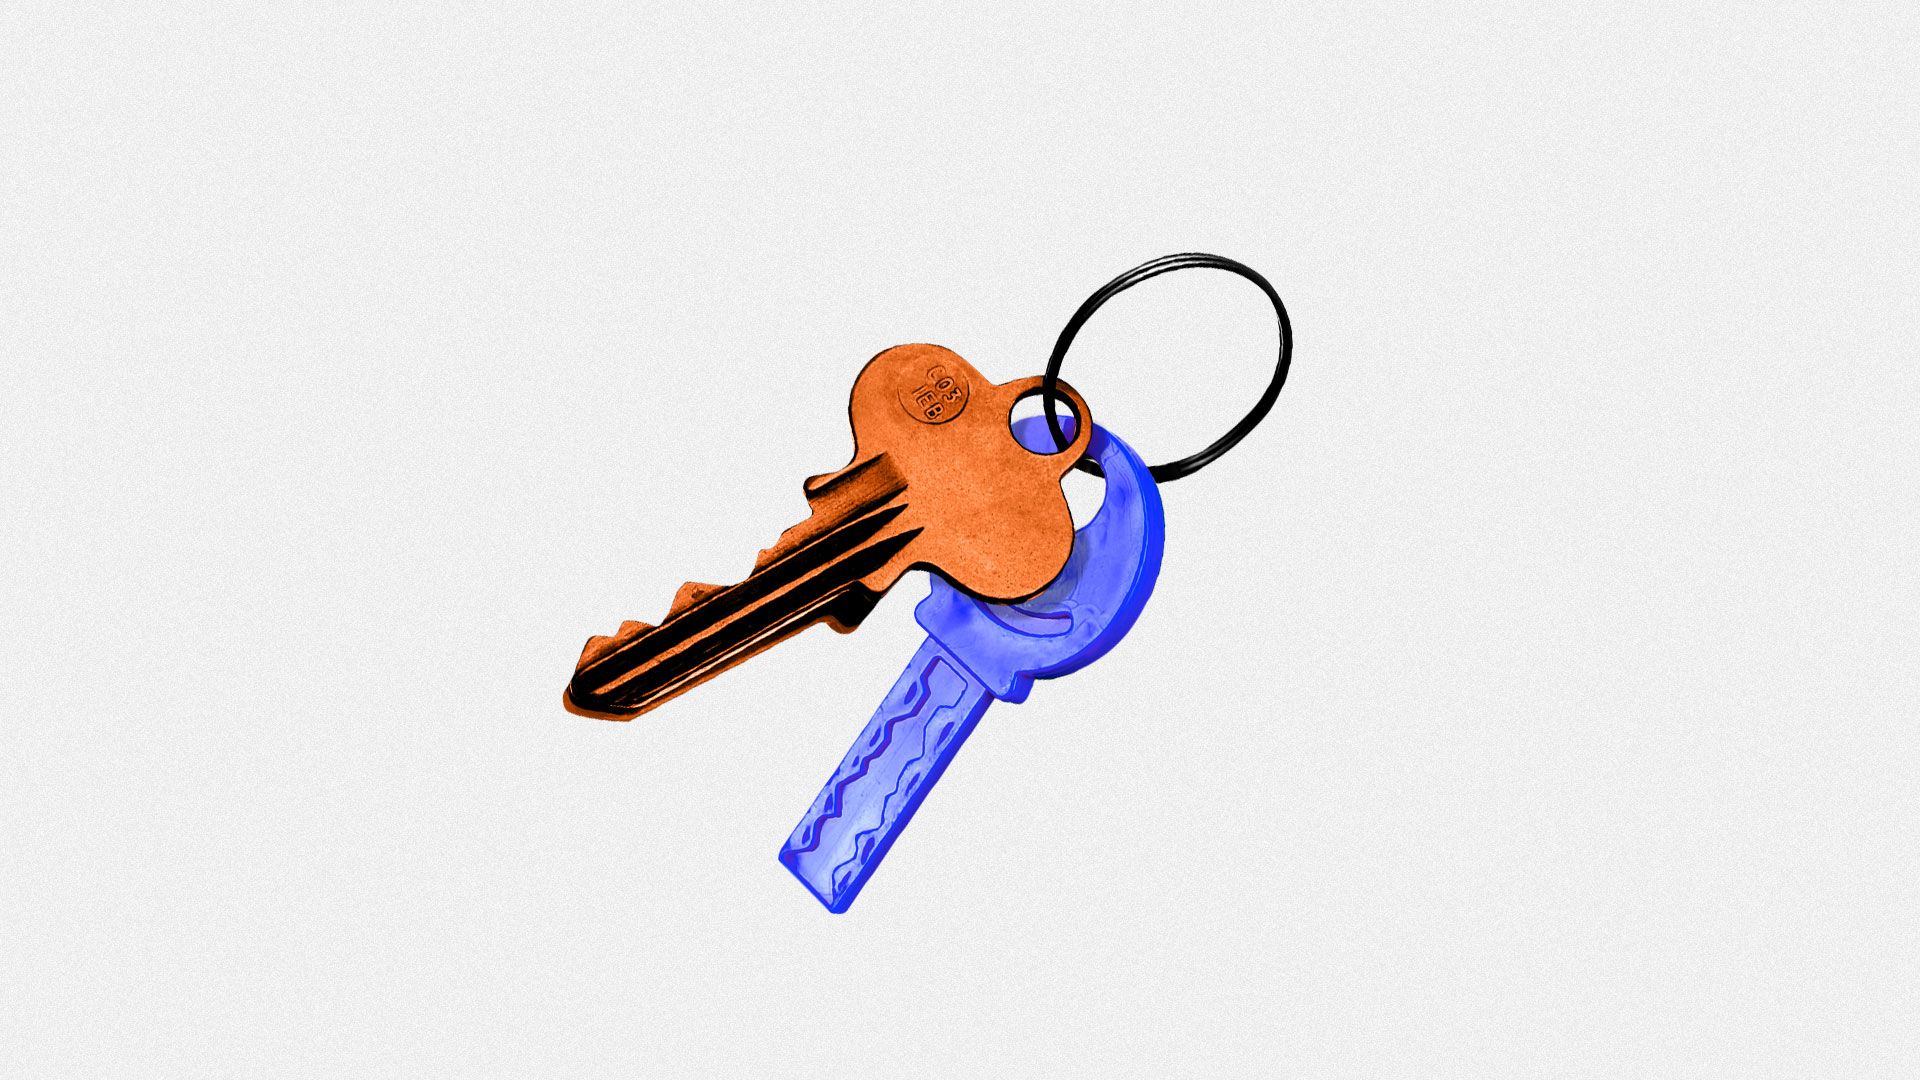 Illustration of keychain with regular key and child’s plastic key.